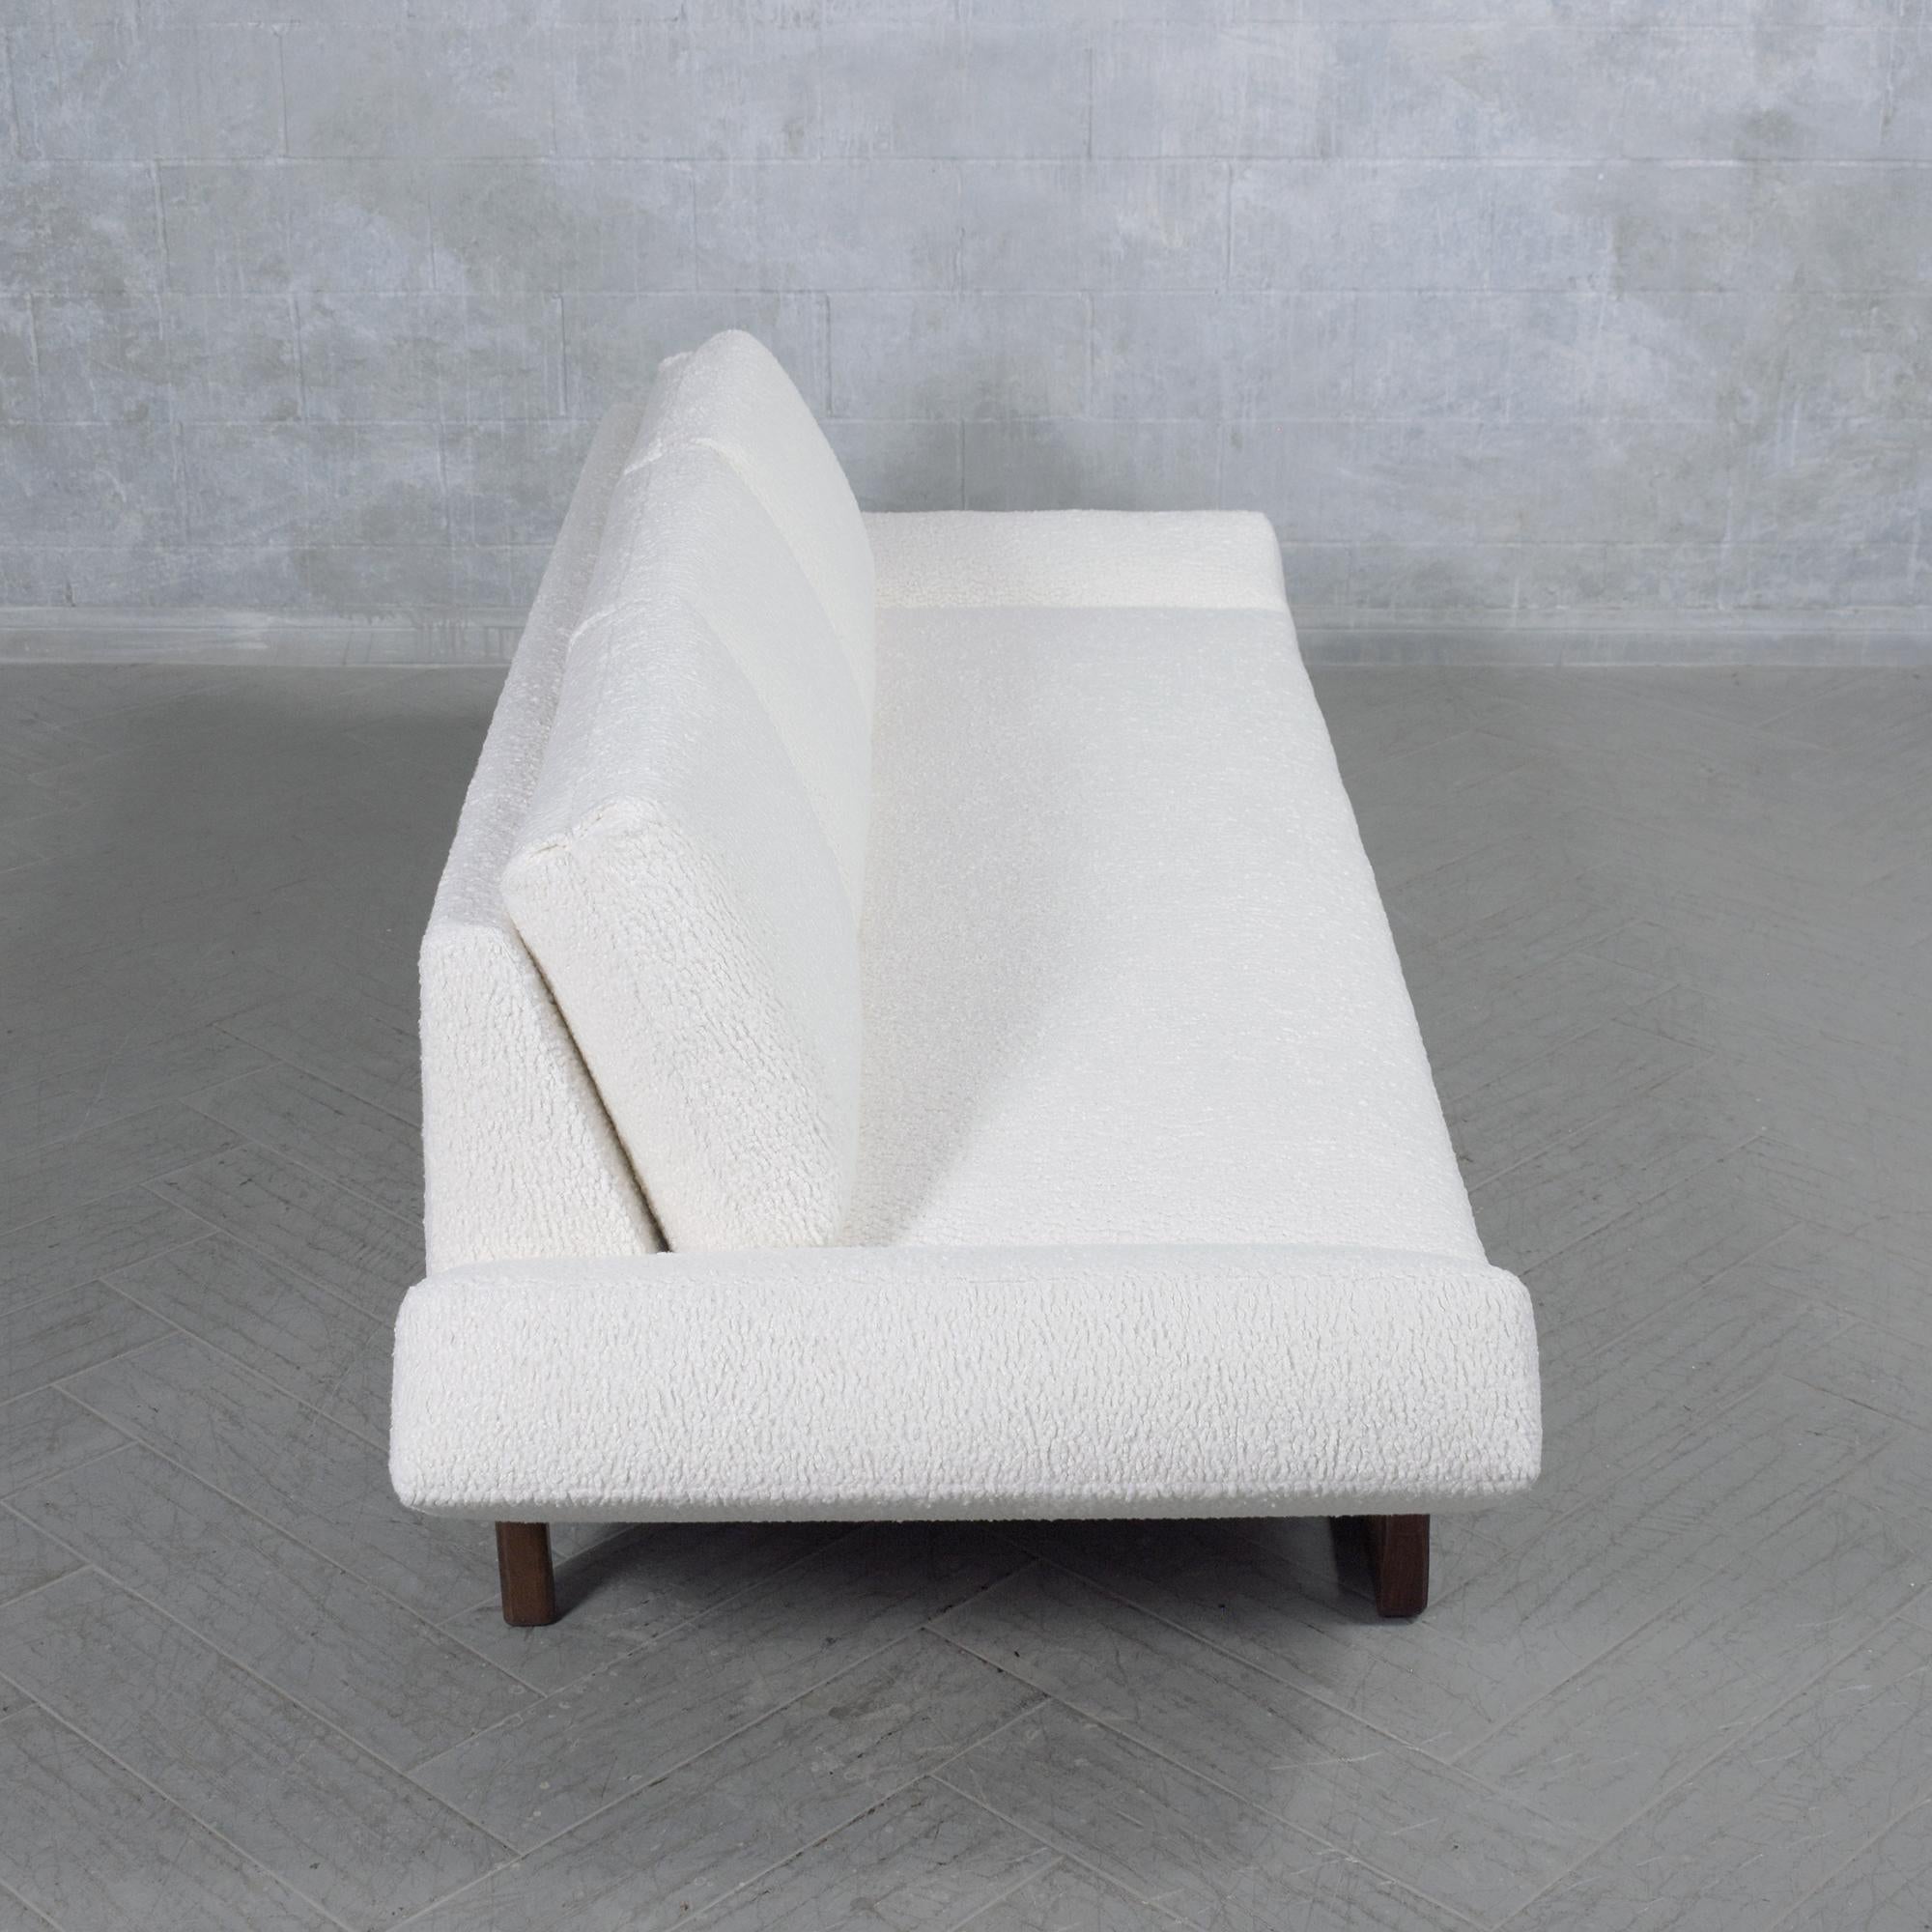 Vintage Mid-Century Sofa Restored: Classic Design Meets Modern Comfort 5